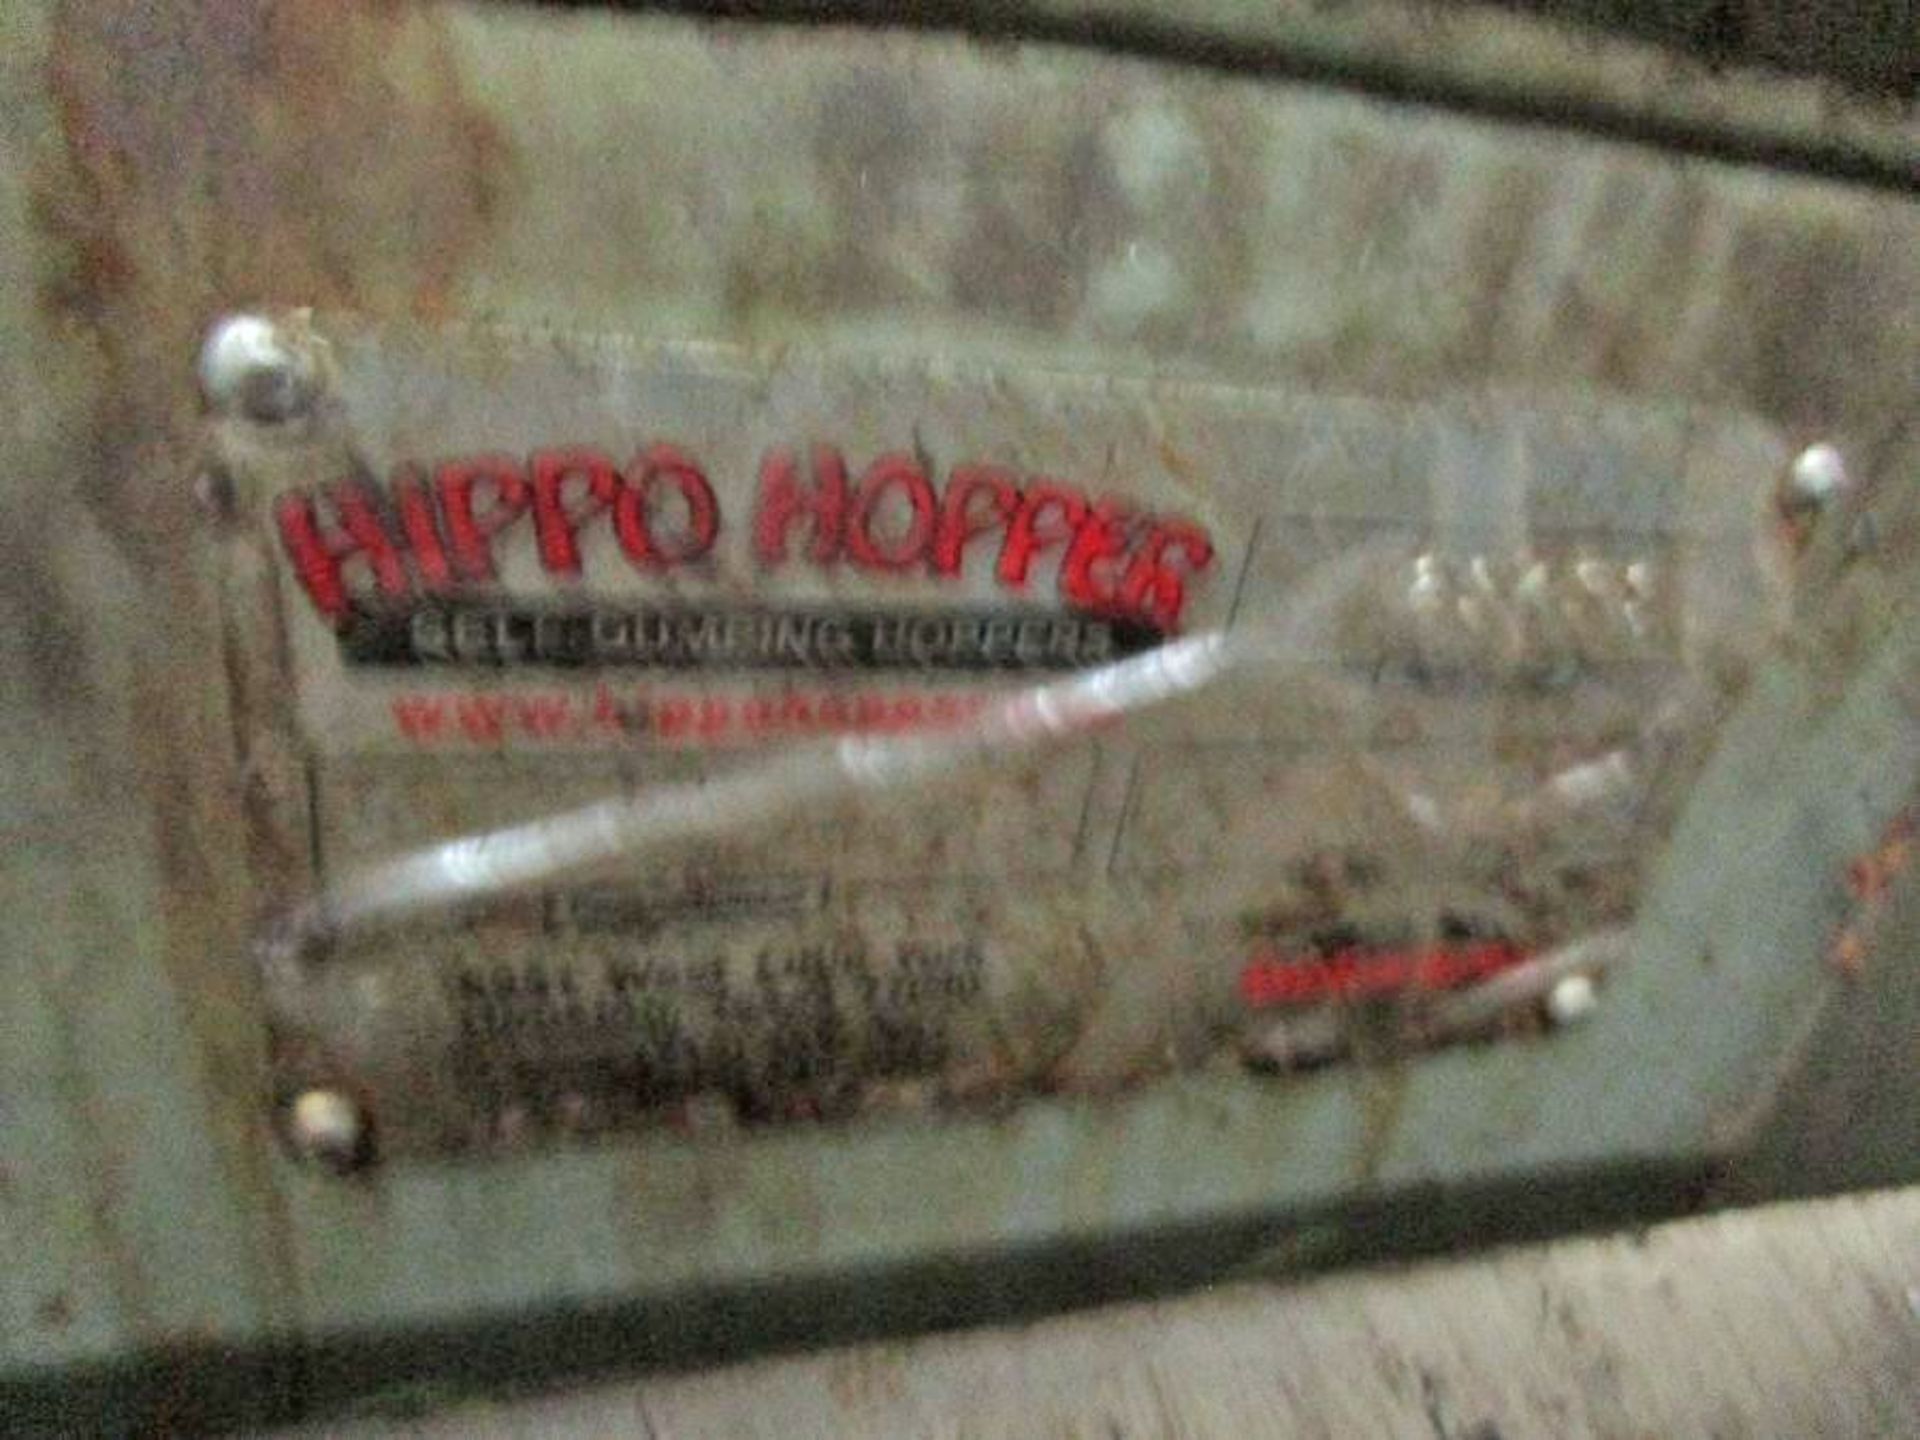 Hippo Hopper Model HH-6 1 Cubic Yard Self Dumping Hopper - Image 2 of 2